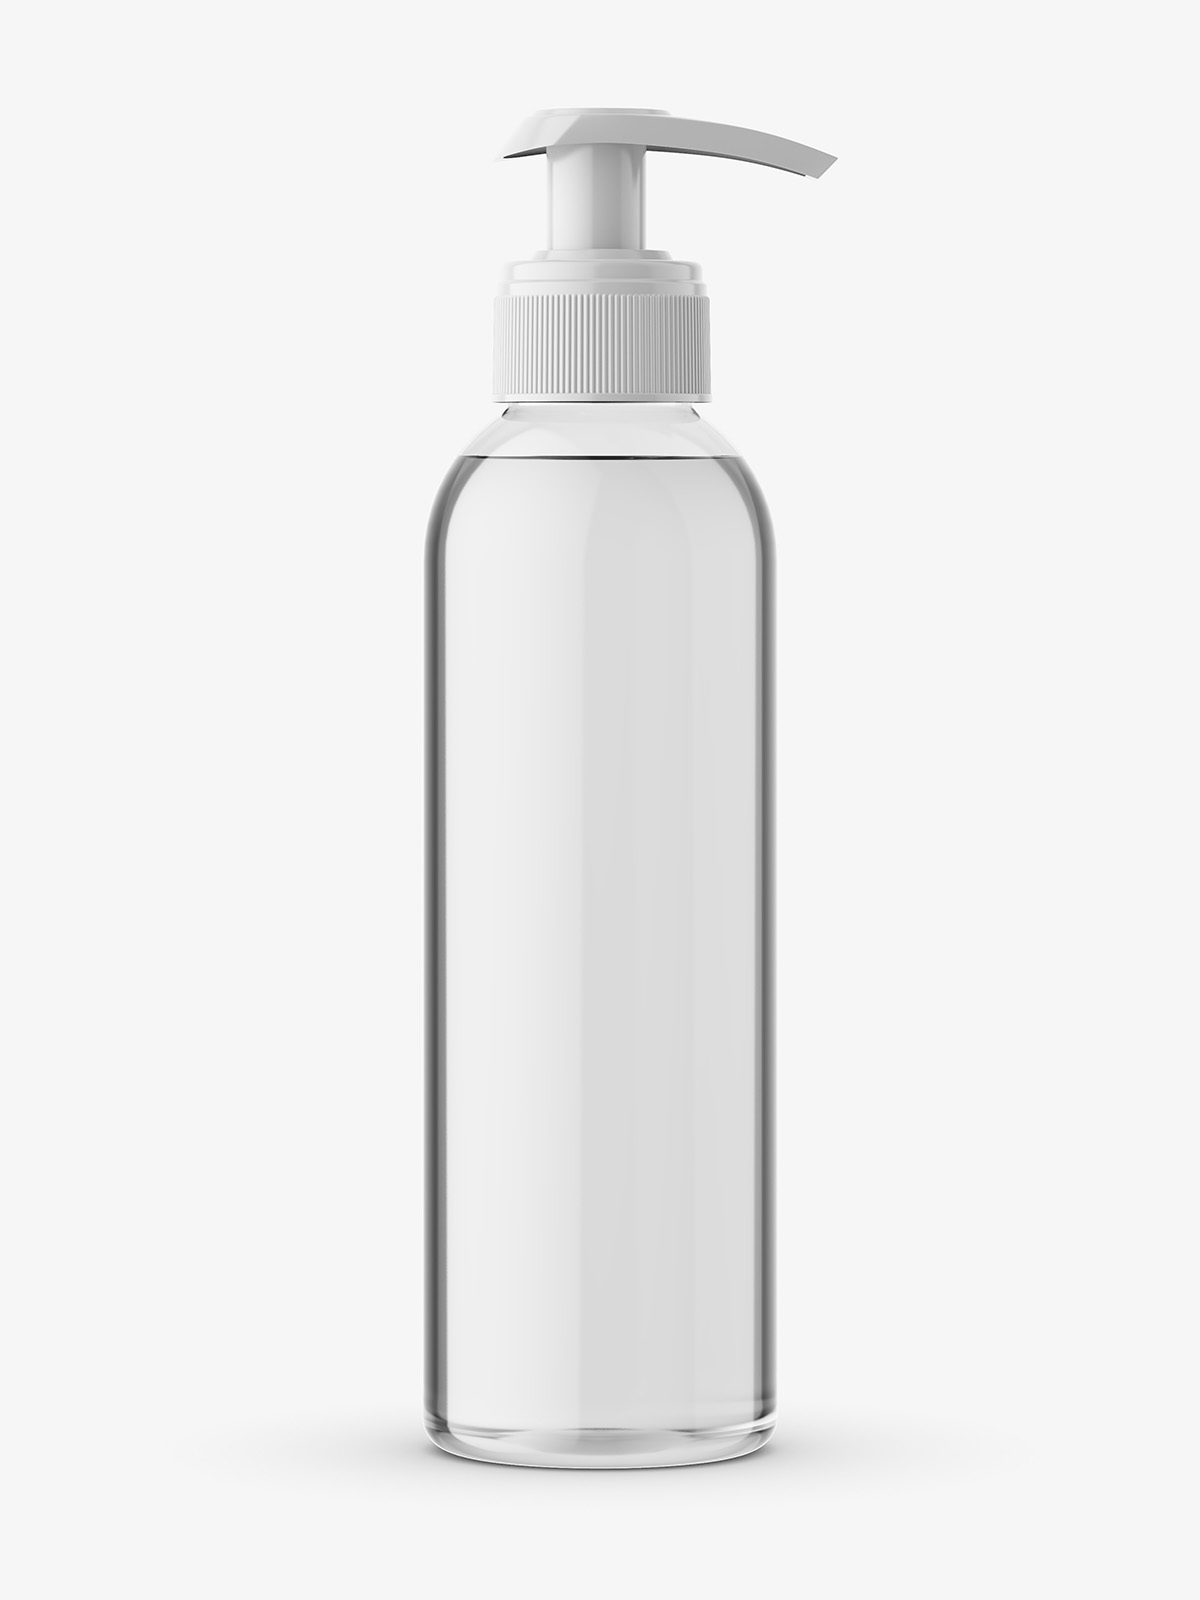 Download Plastic Cosmetic Bottle Mockup